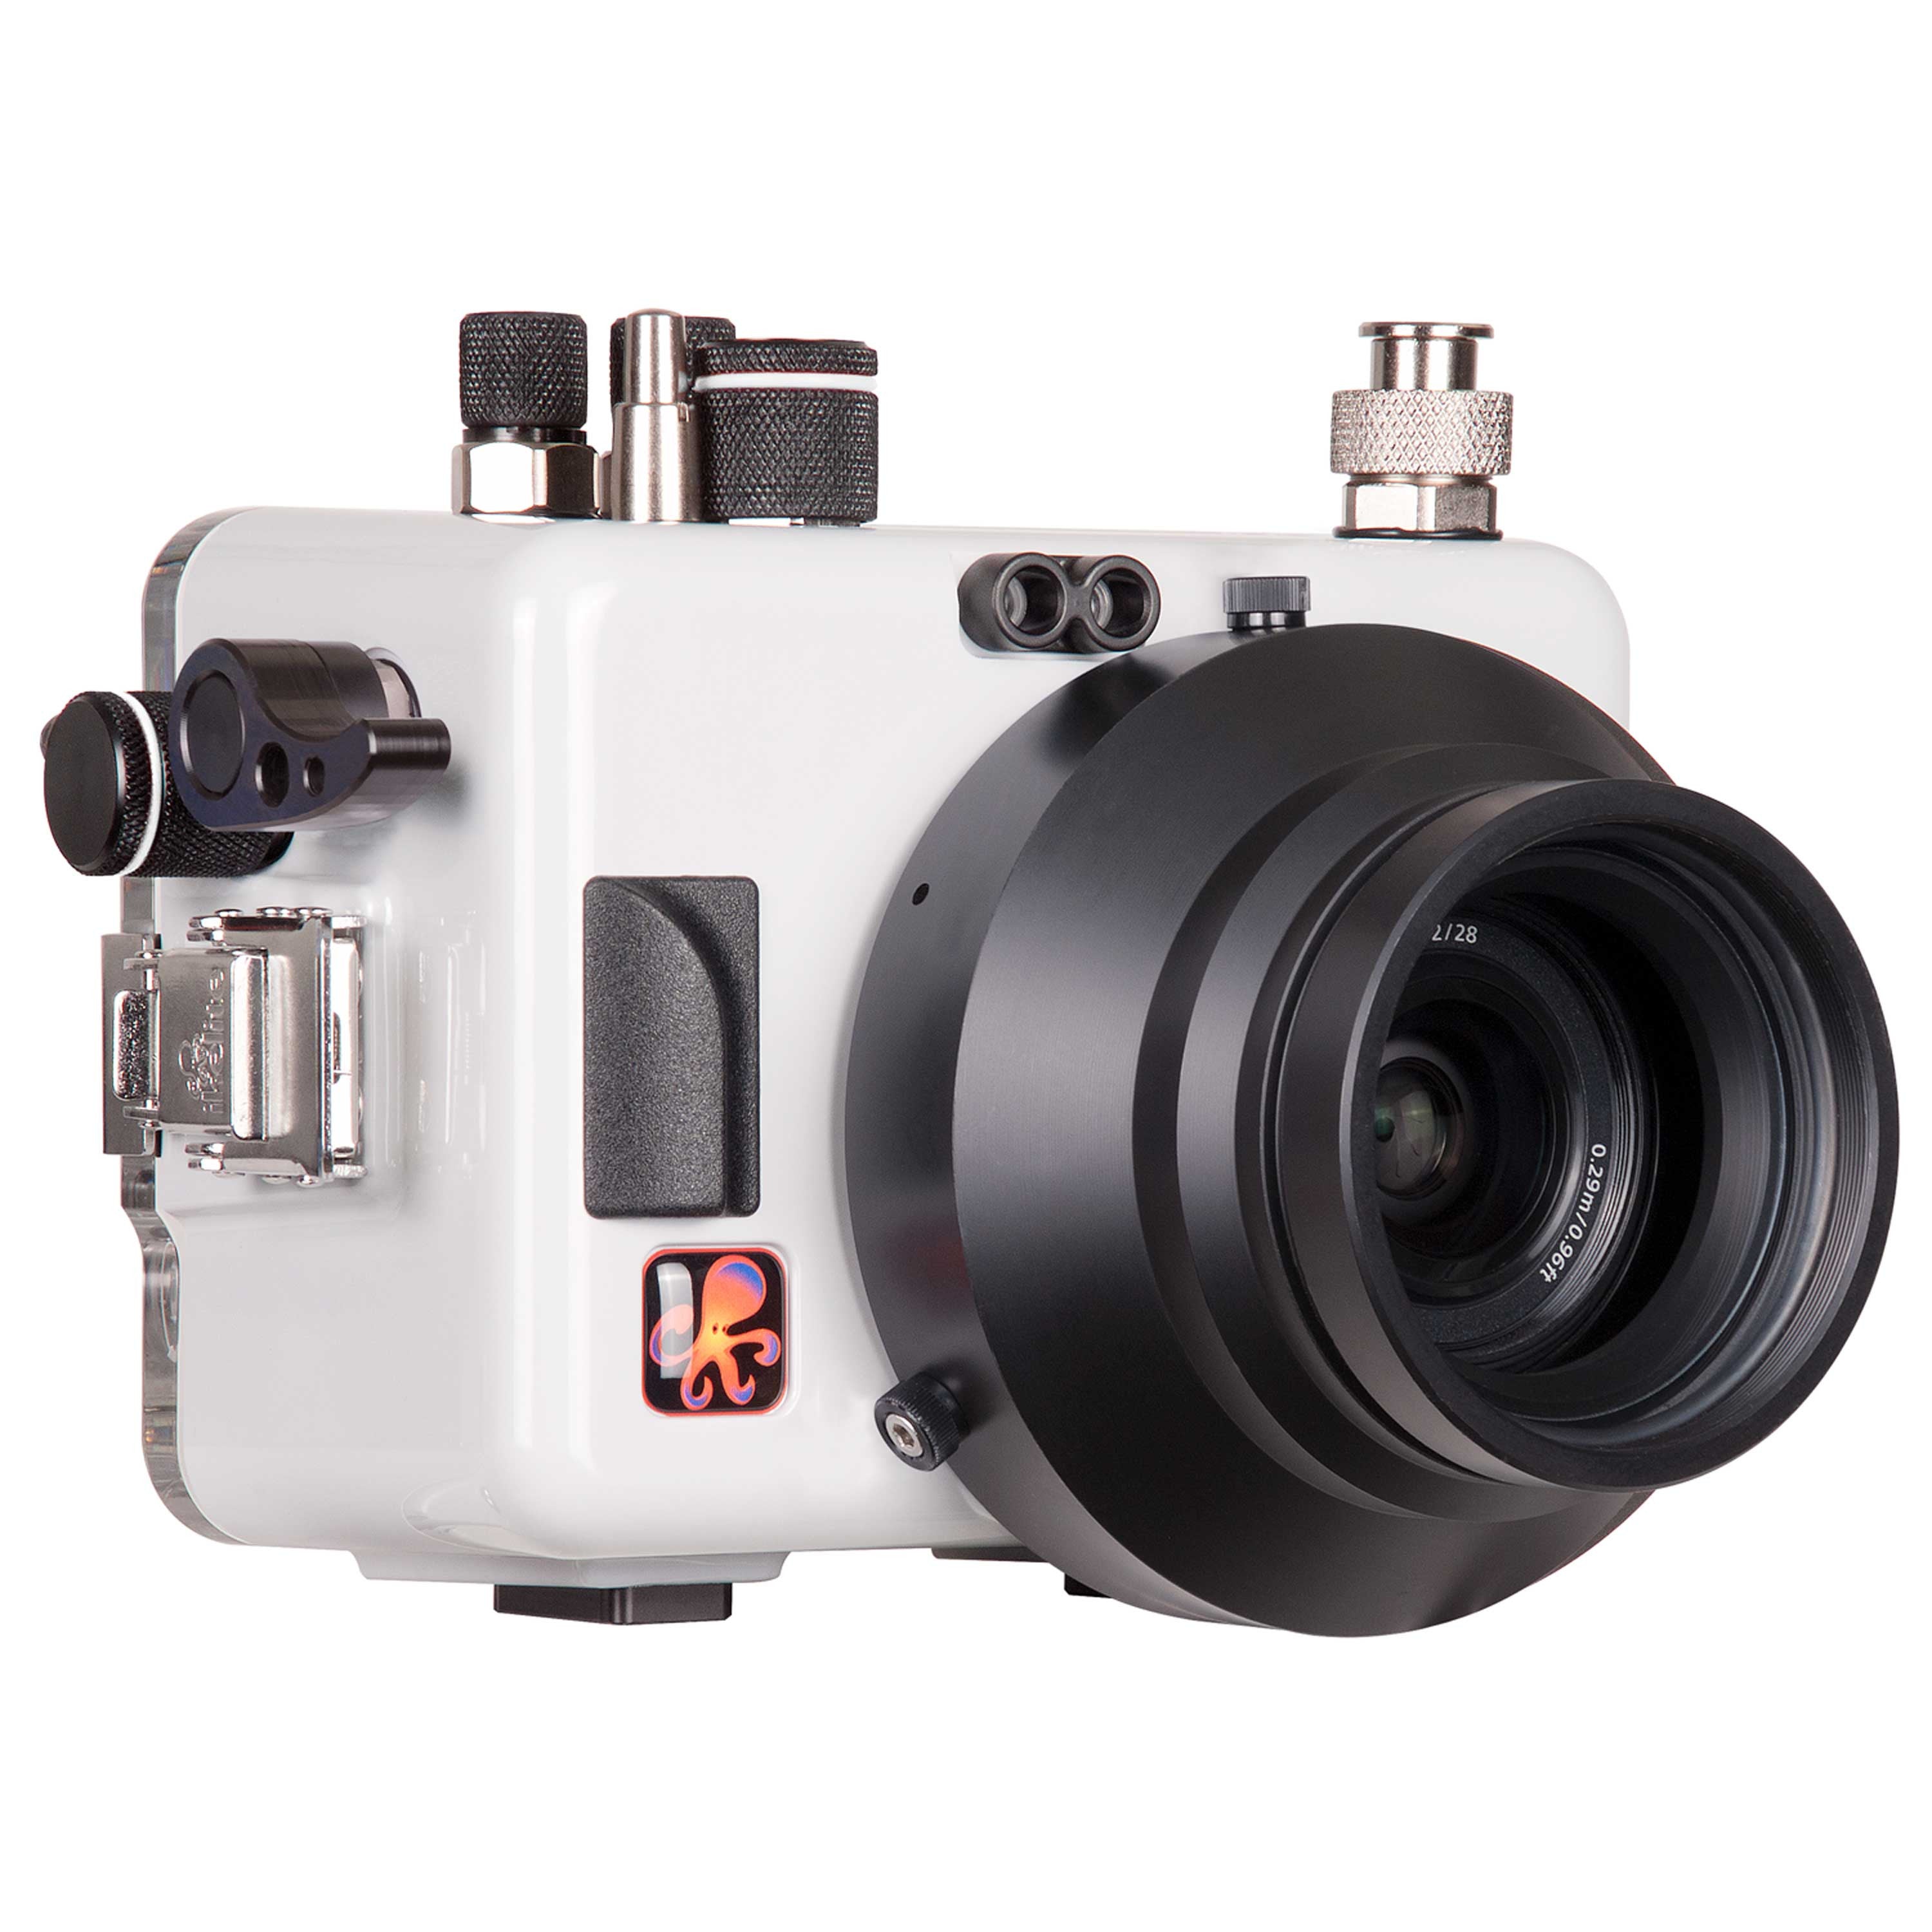 200DLM/A Underwater TTL Housing for Sony Alpha A6300 Mirrorless Camera